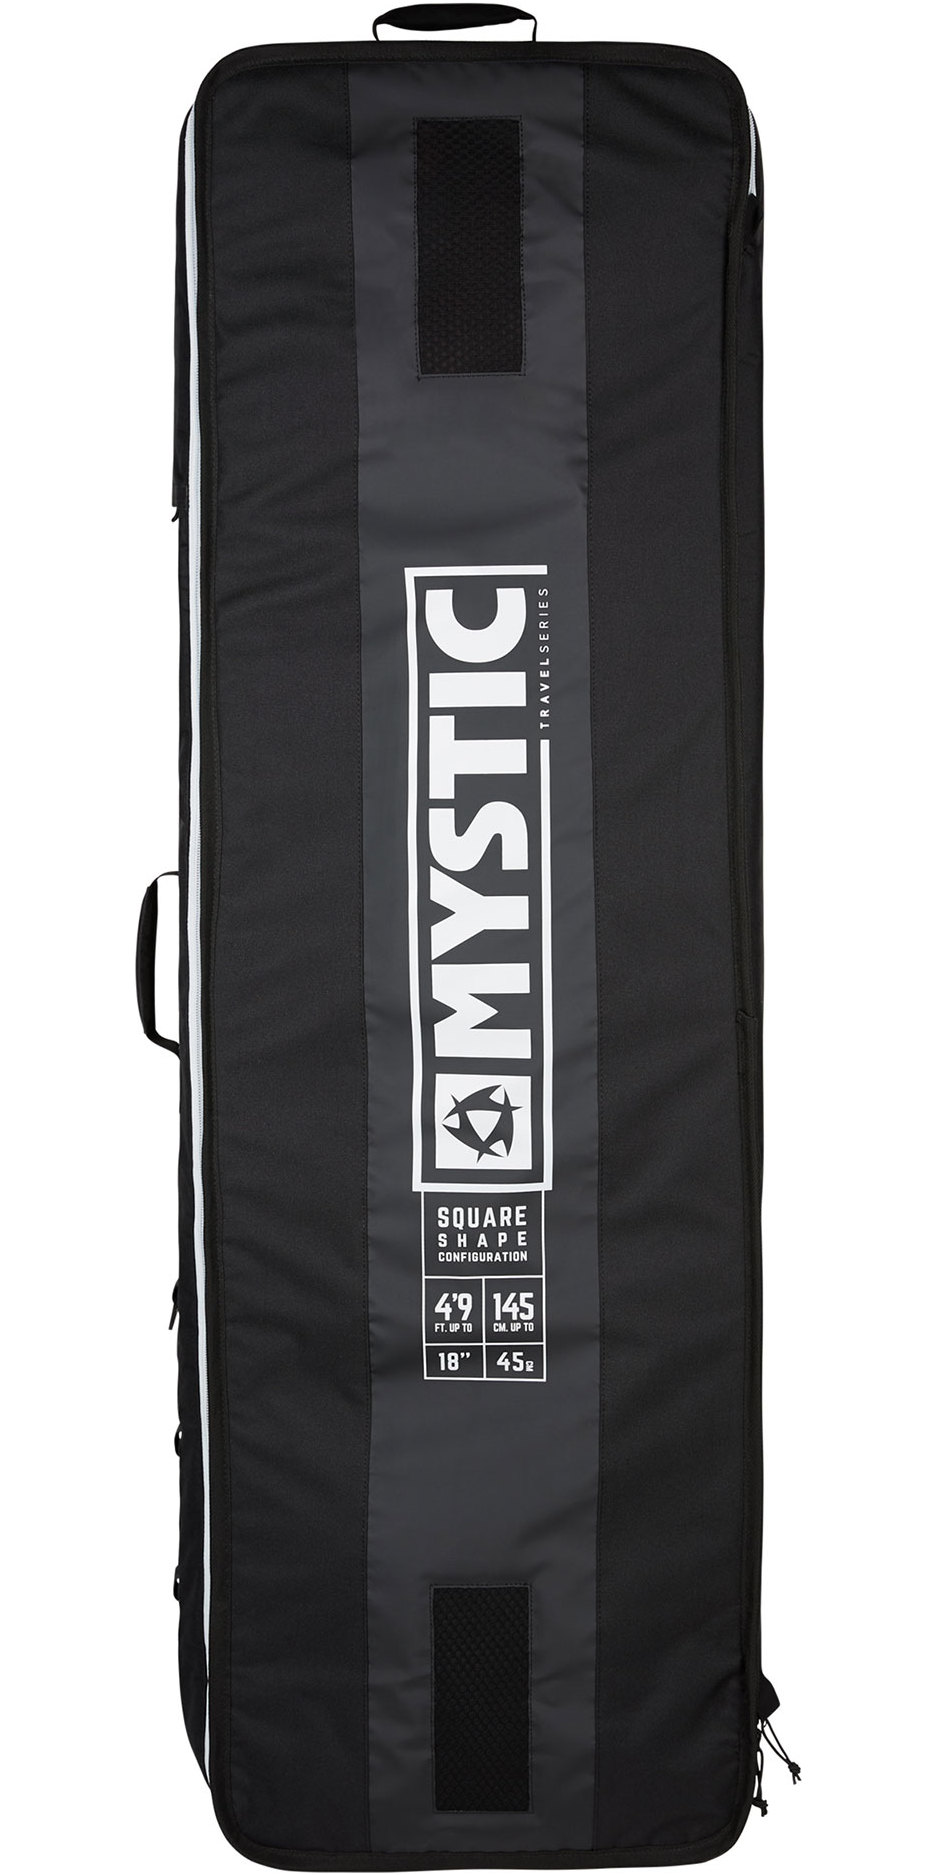 MYSTIC Wakeboard Boardbag Tasche STAR BOOTS Boardbag 2021 black Boardbag 